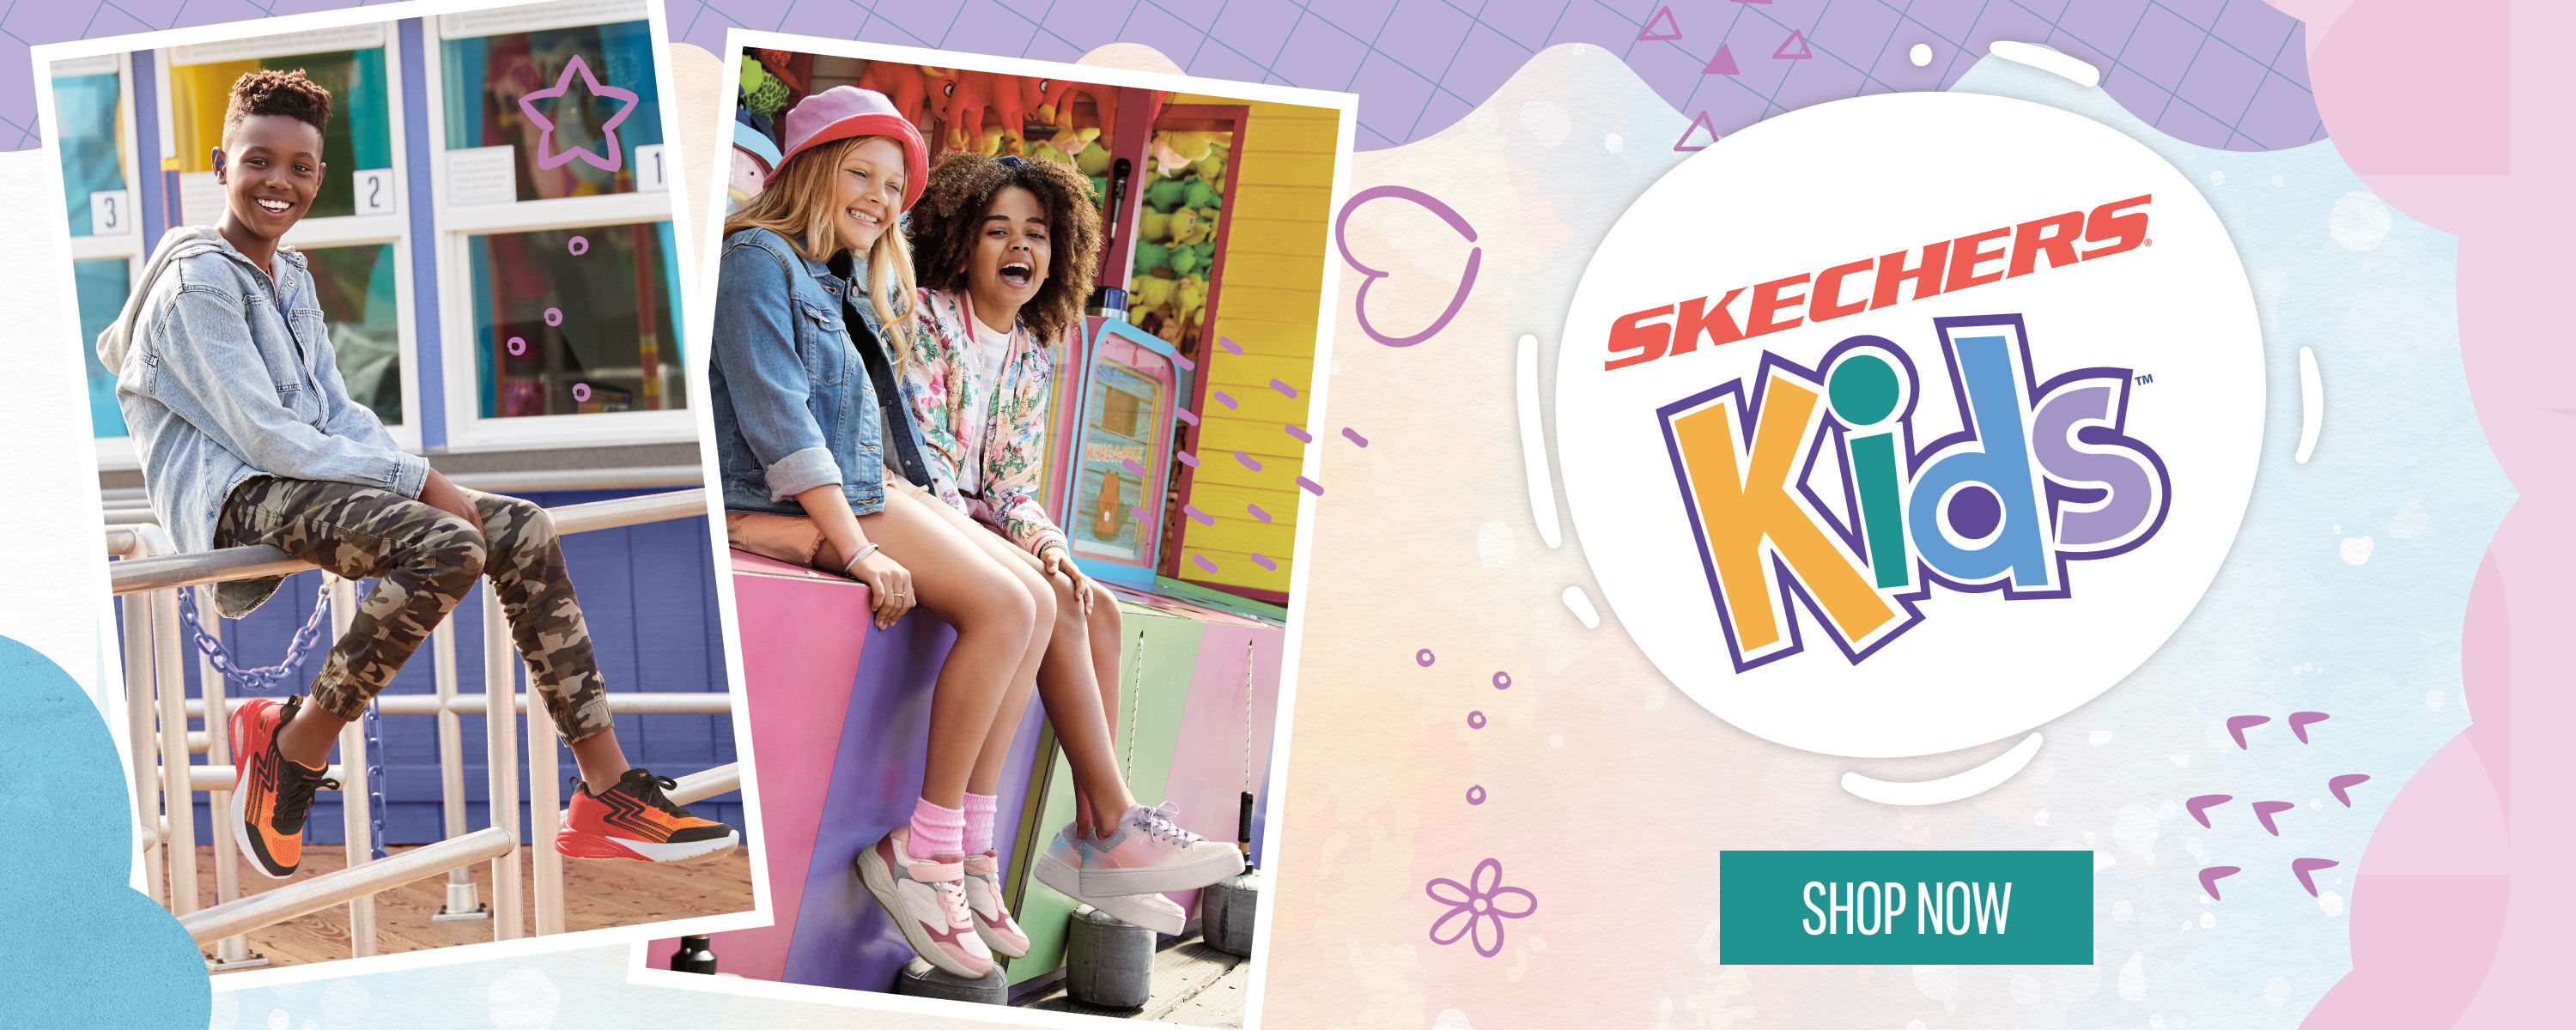 Skechers Kids - SHOP NOW